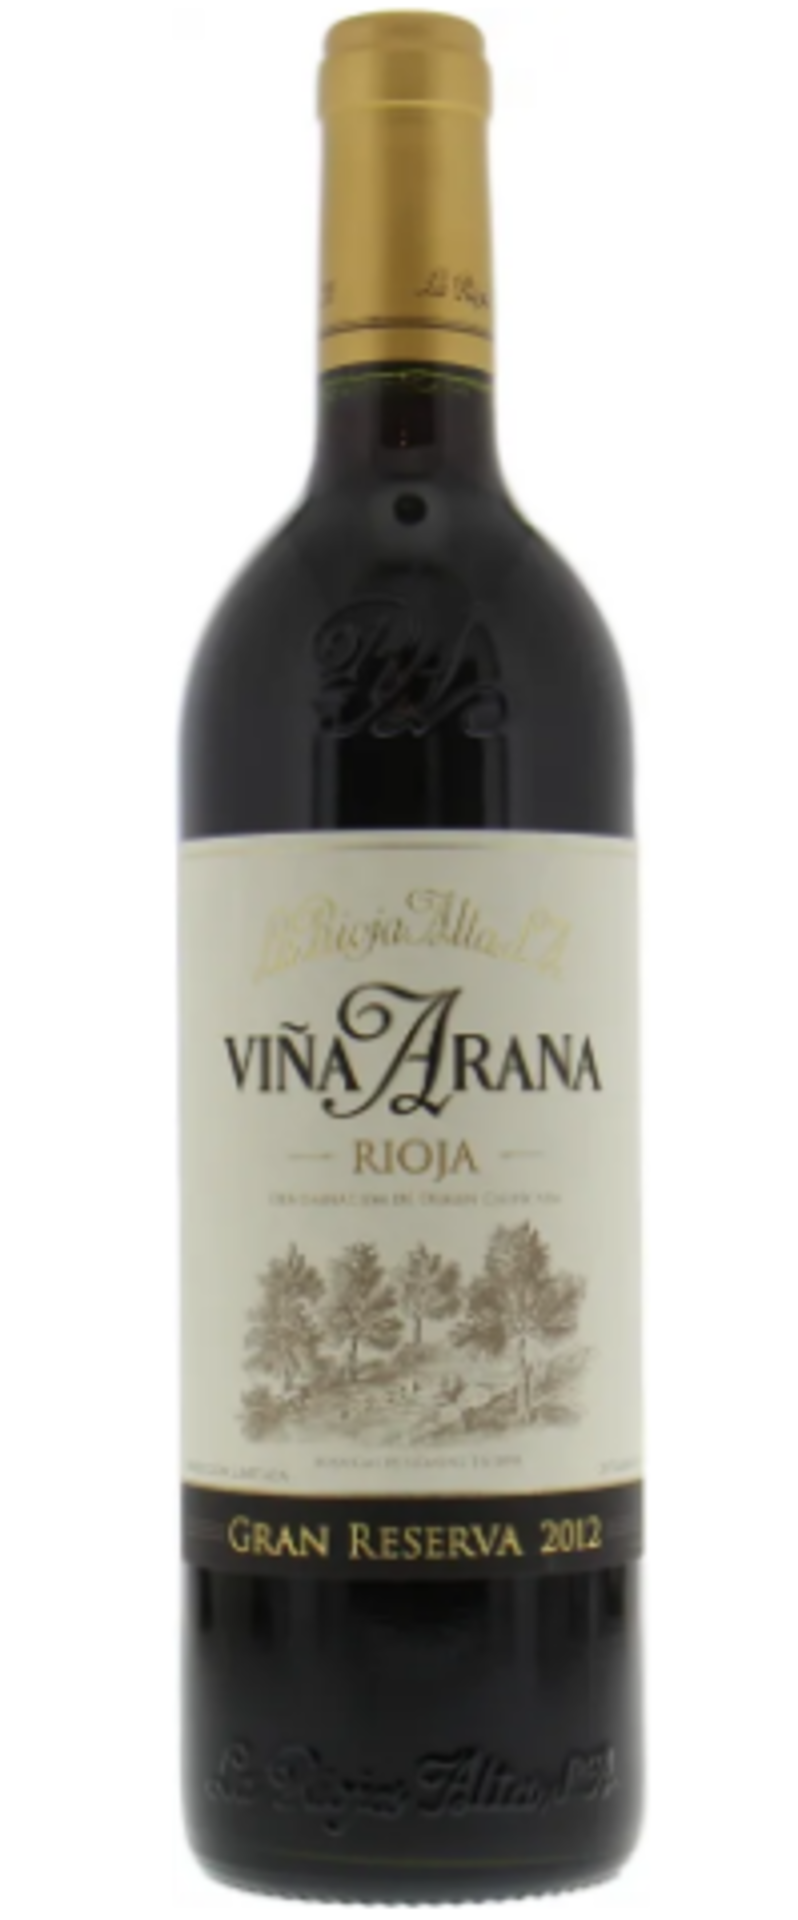 La Rioja Alta S.A. Vina Arana Gran Reserva 2012 750ml ( Bid Is For 1x Bottle Option To Purchase